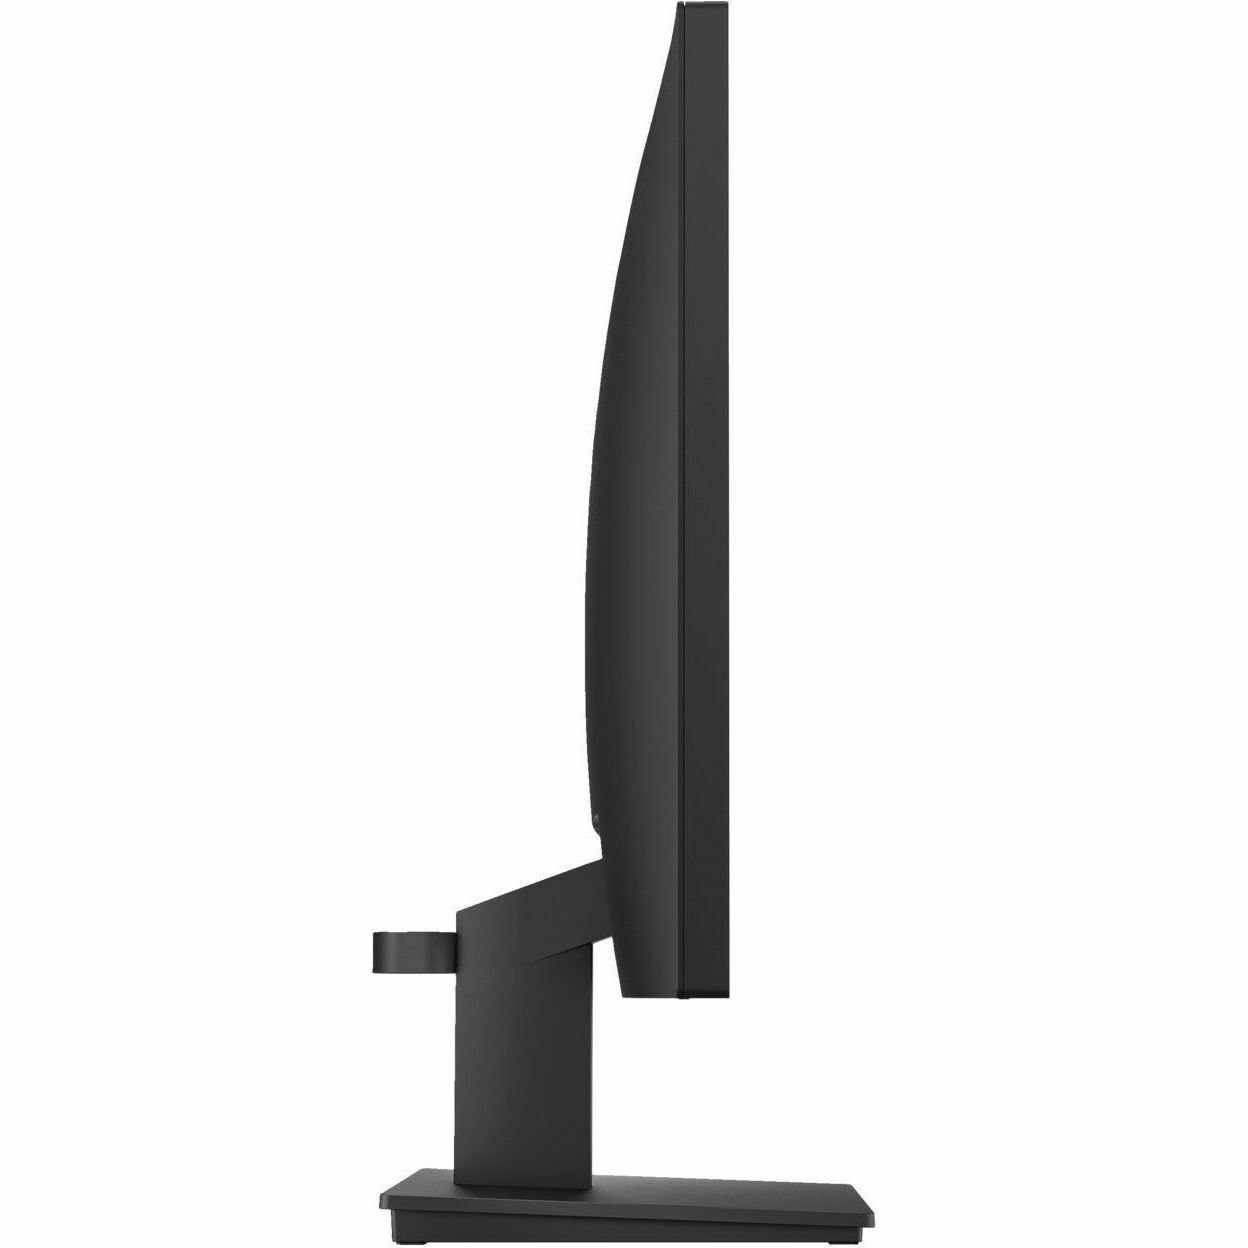 HP P22v G5 21" Class Full HD LED Monitor - 16:9 - Black